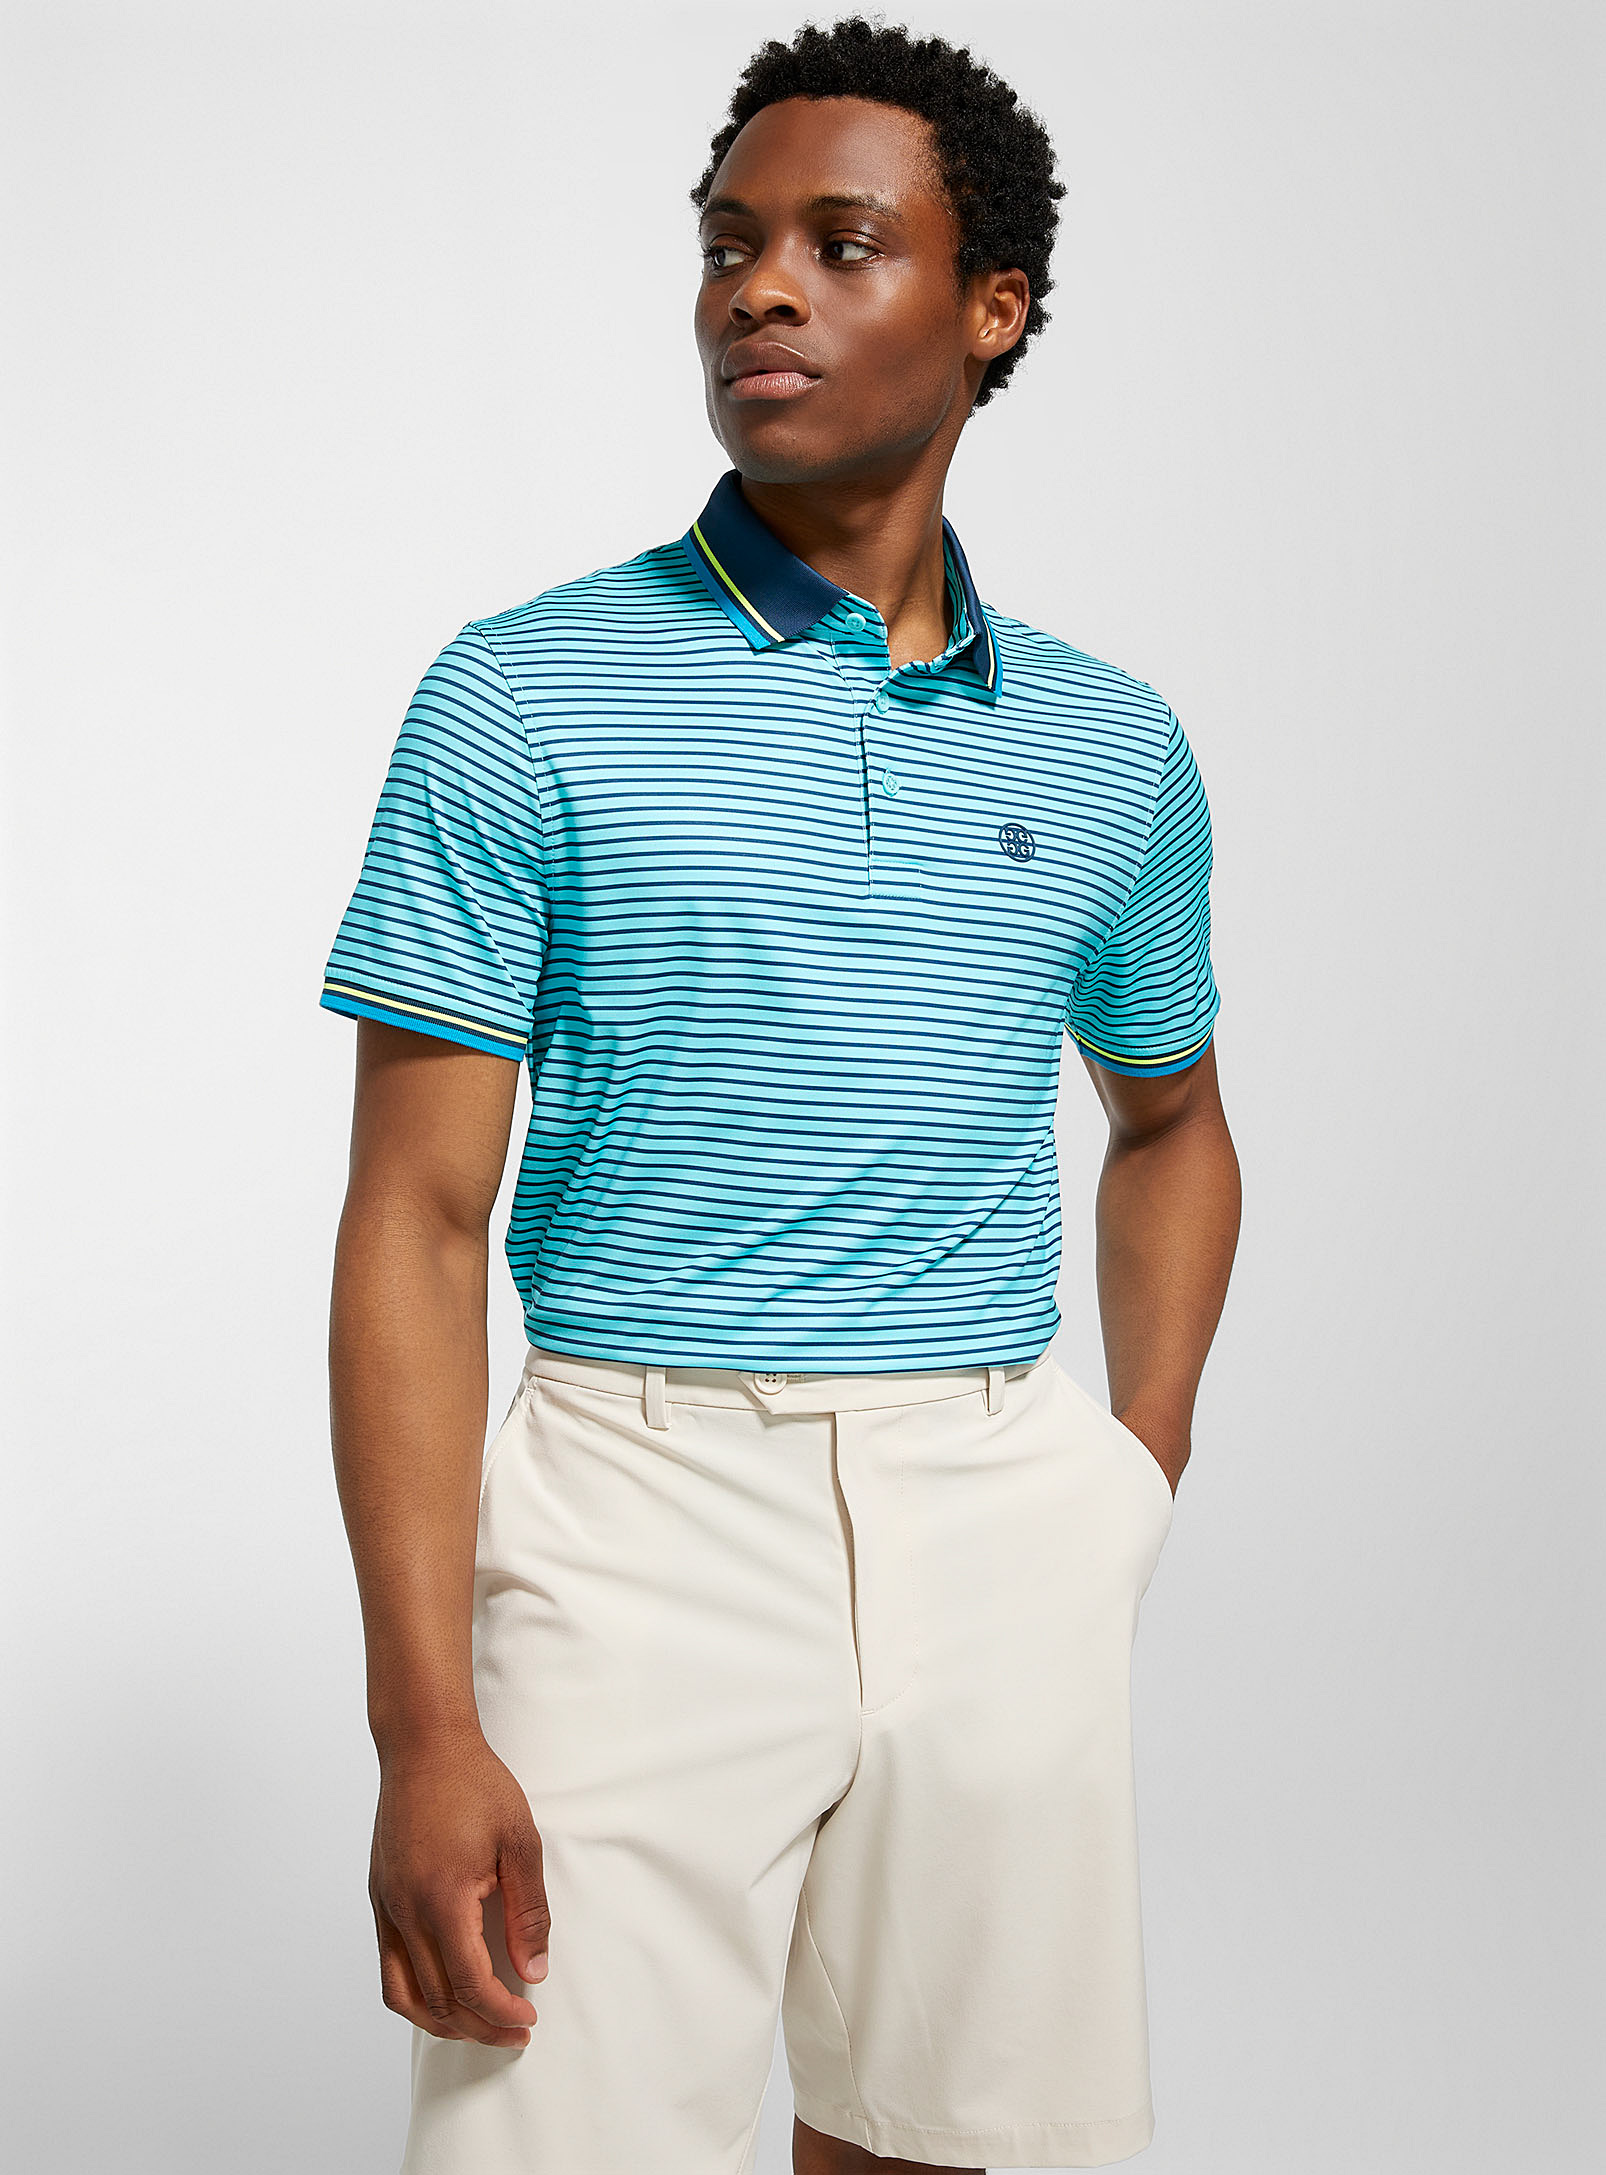 G/Fore - Horizontal stripe golf Polo Shirt